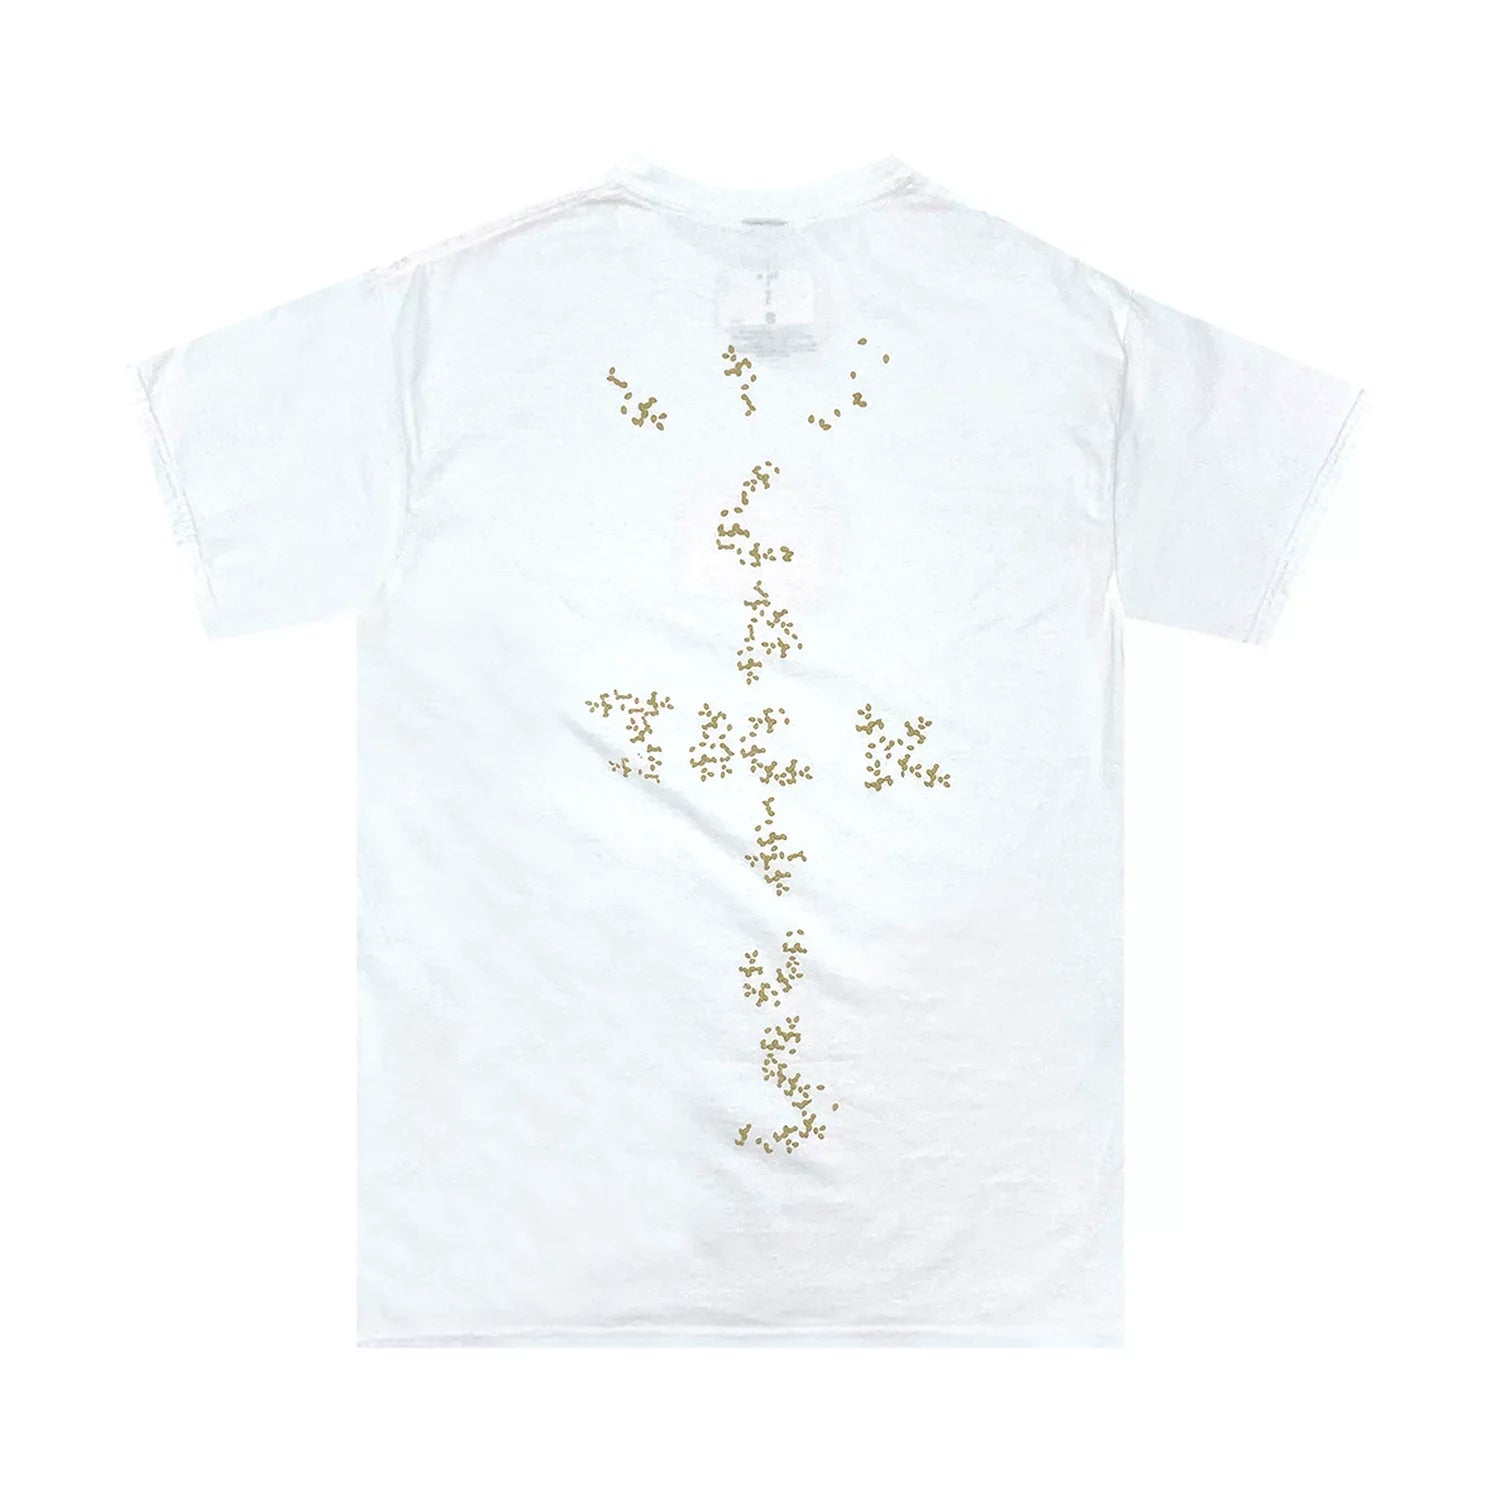 Cactus Jack by Travis Scott Sesame T-Shirt 'White' Clothing